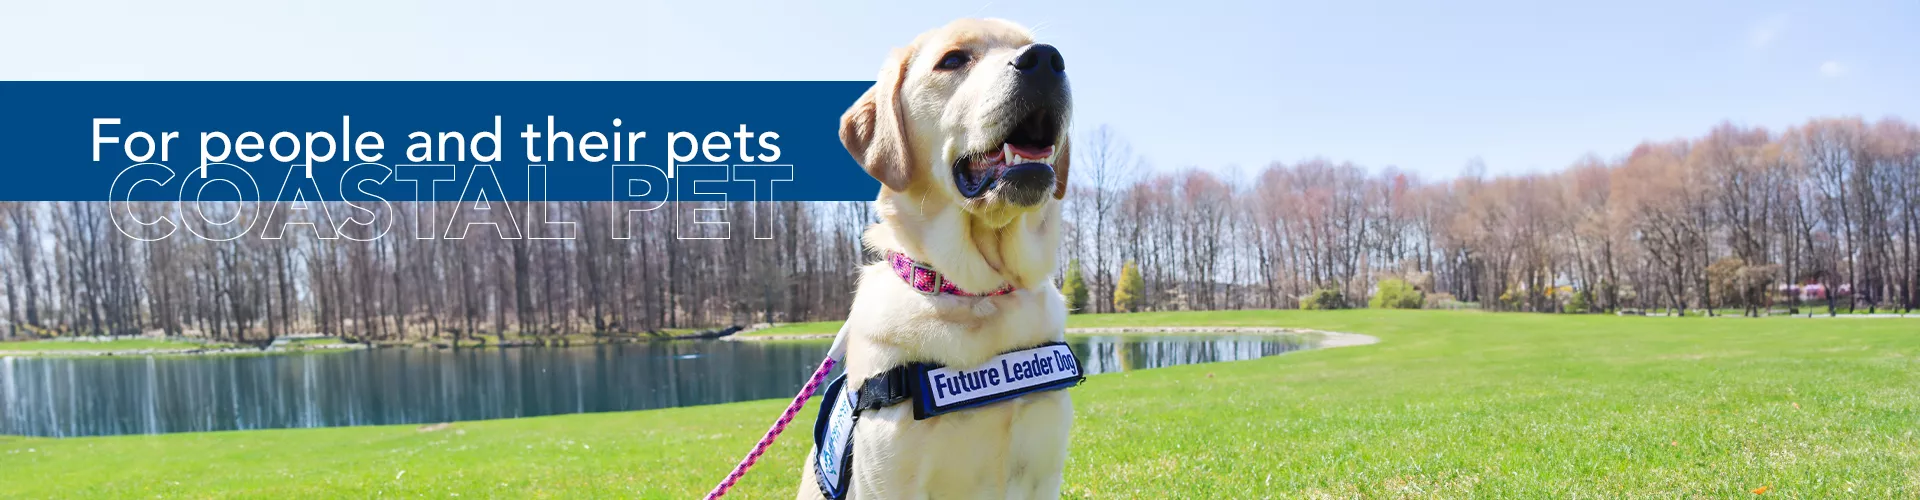 Labrador Retriever wearing a training vest that reads "Future Leader Dog"